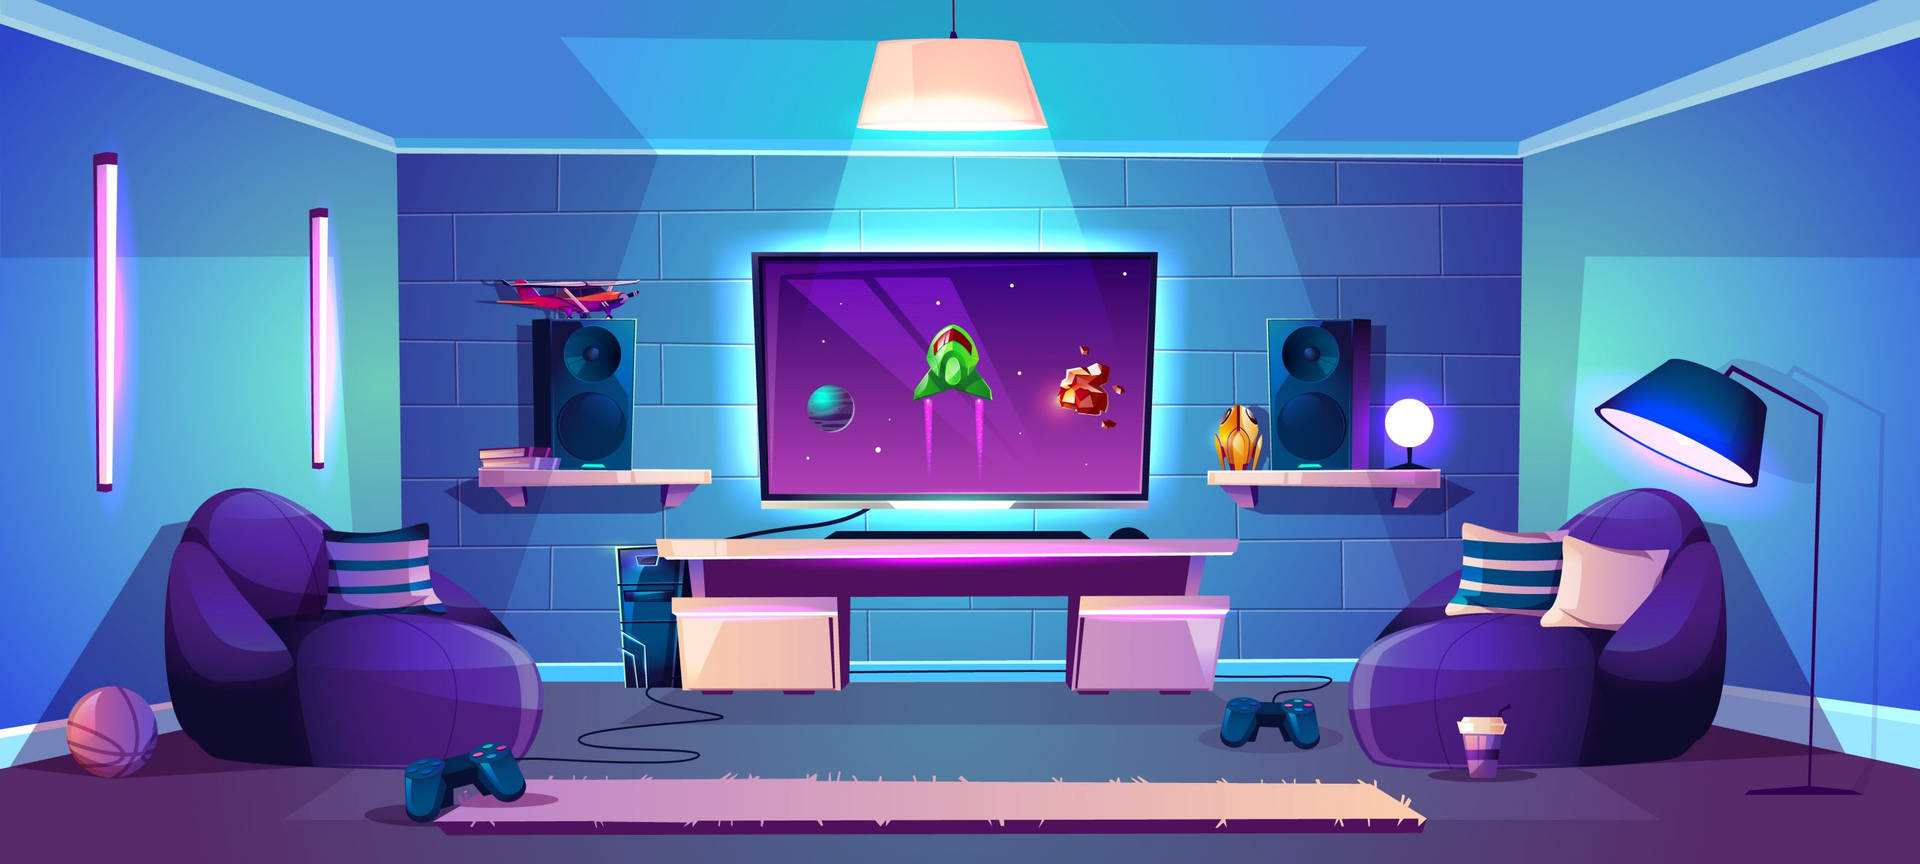 Gaming Room Digital Art Background